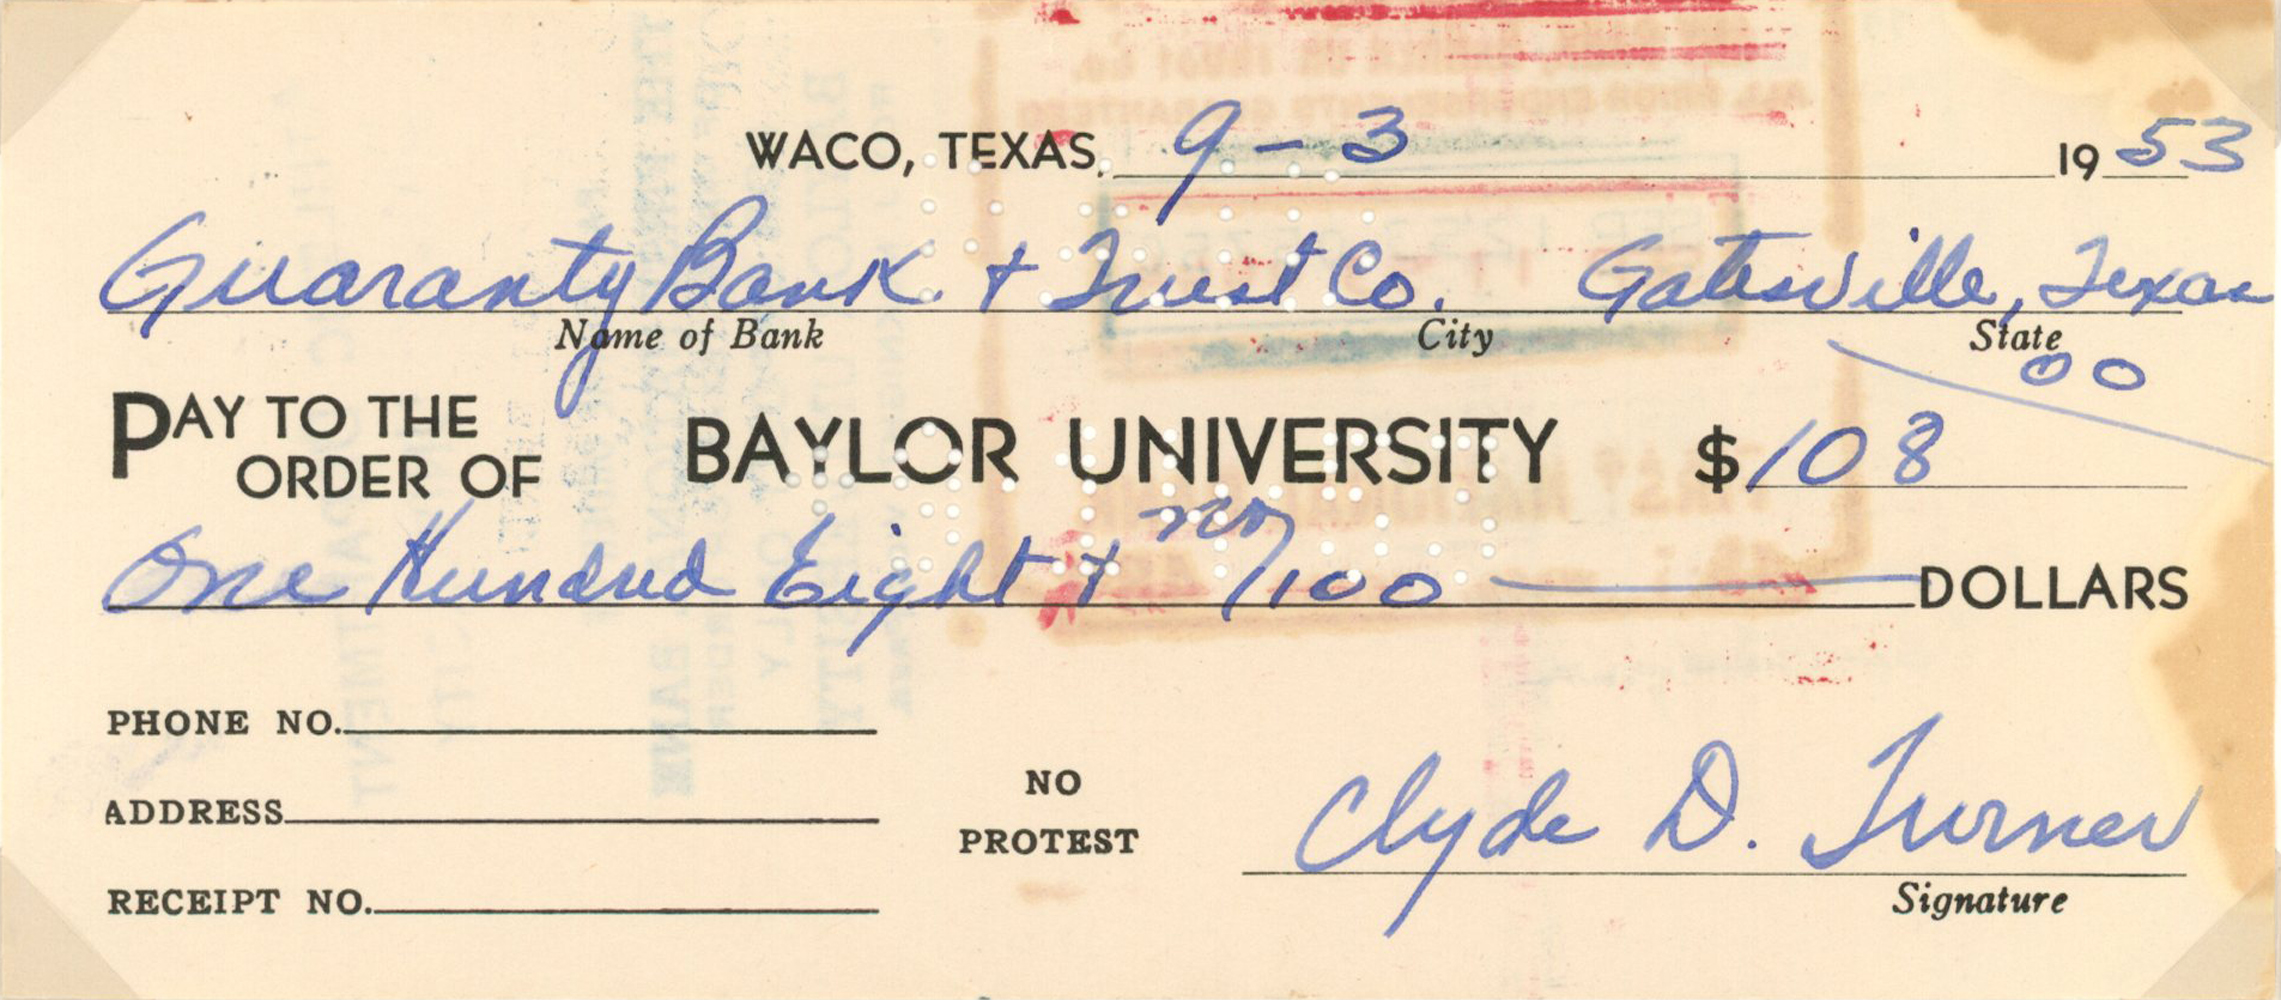 Clyde Bulldog Turner Signed 1953 Waco Texas Baylor University Check